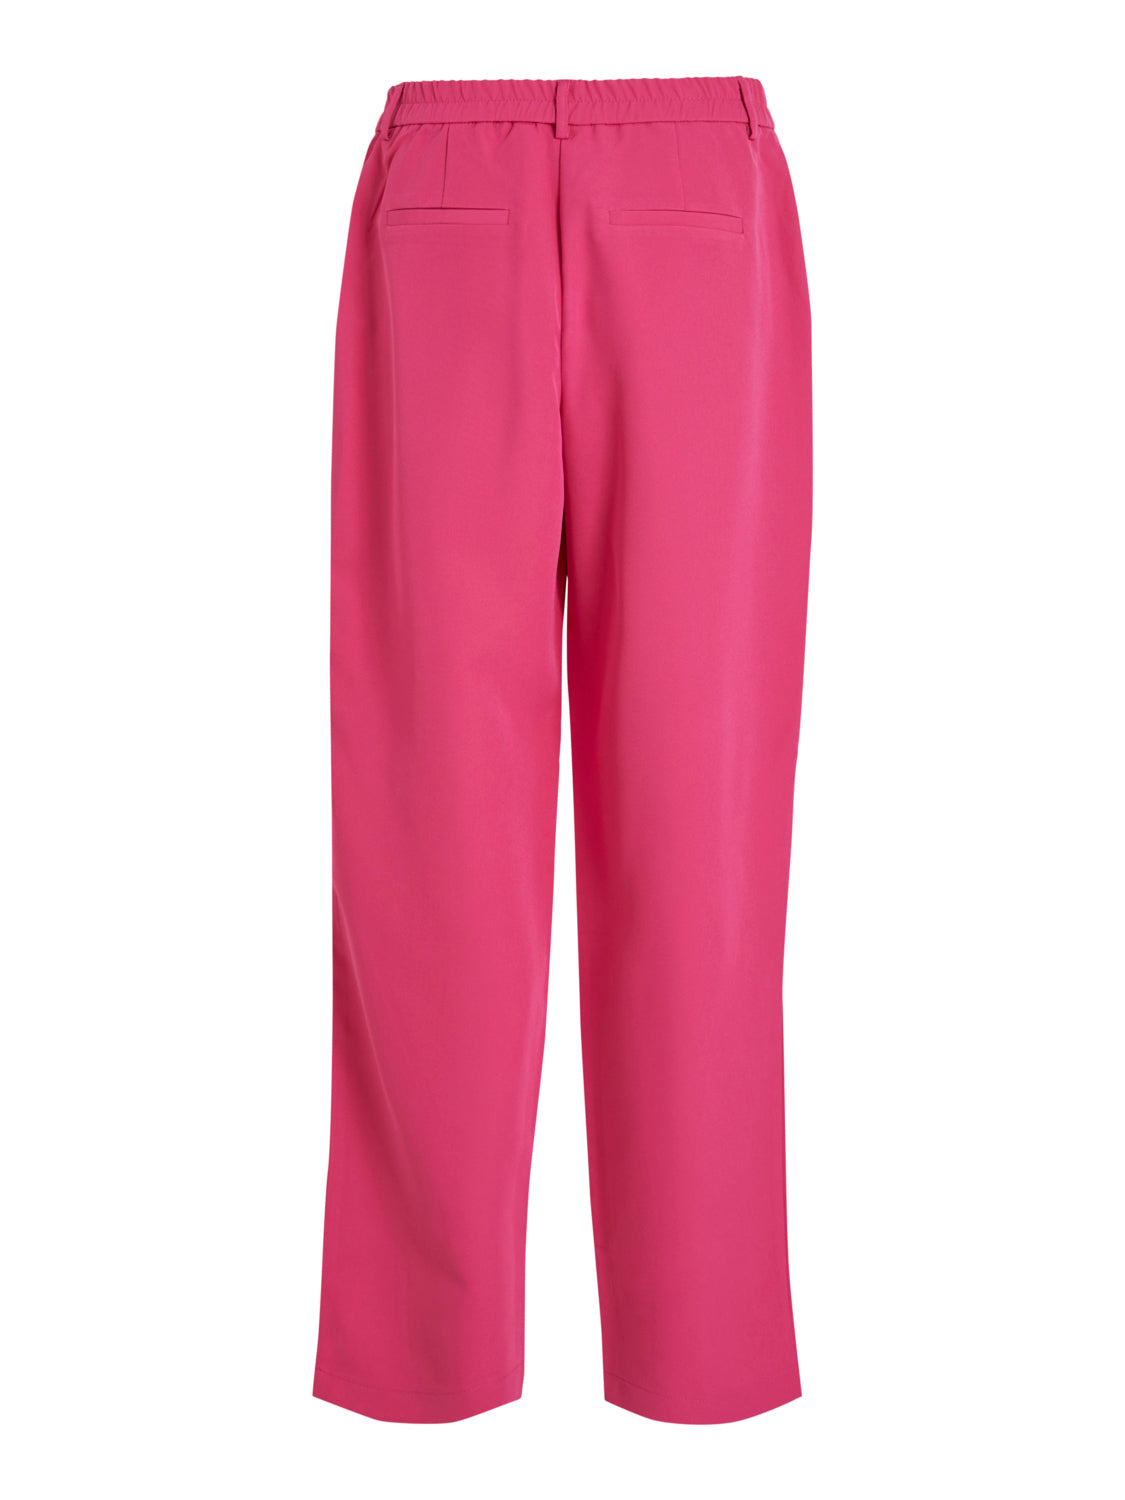 VIKAMMA Pants - Pink Yarrow